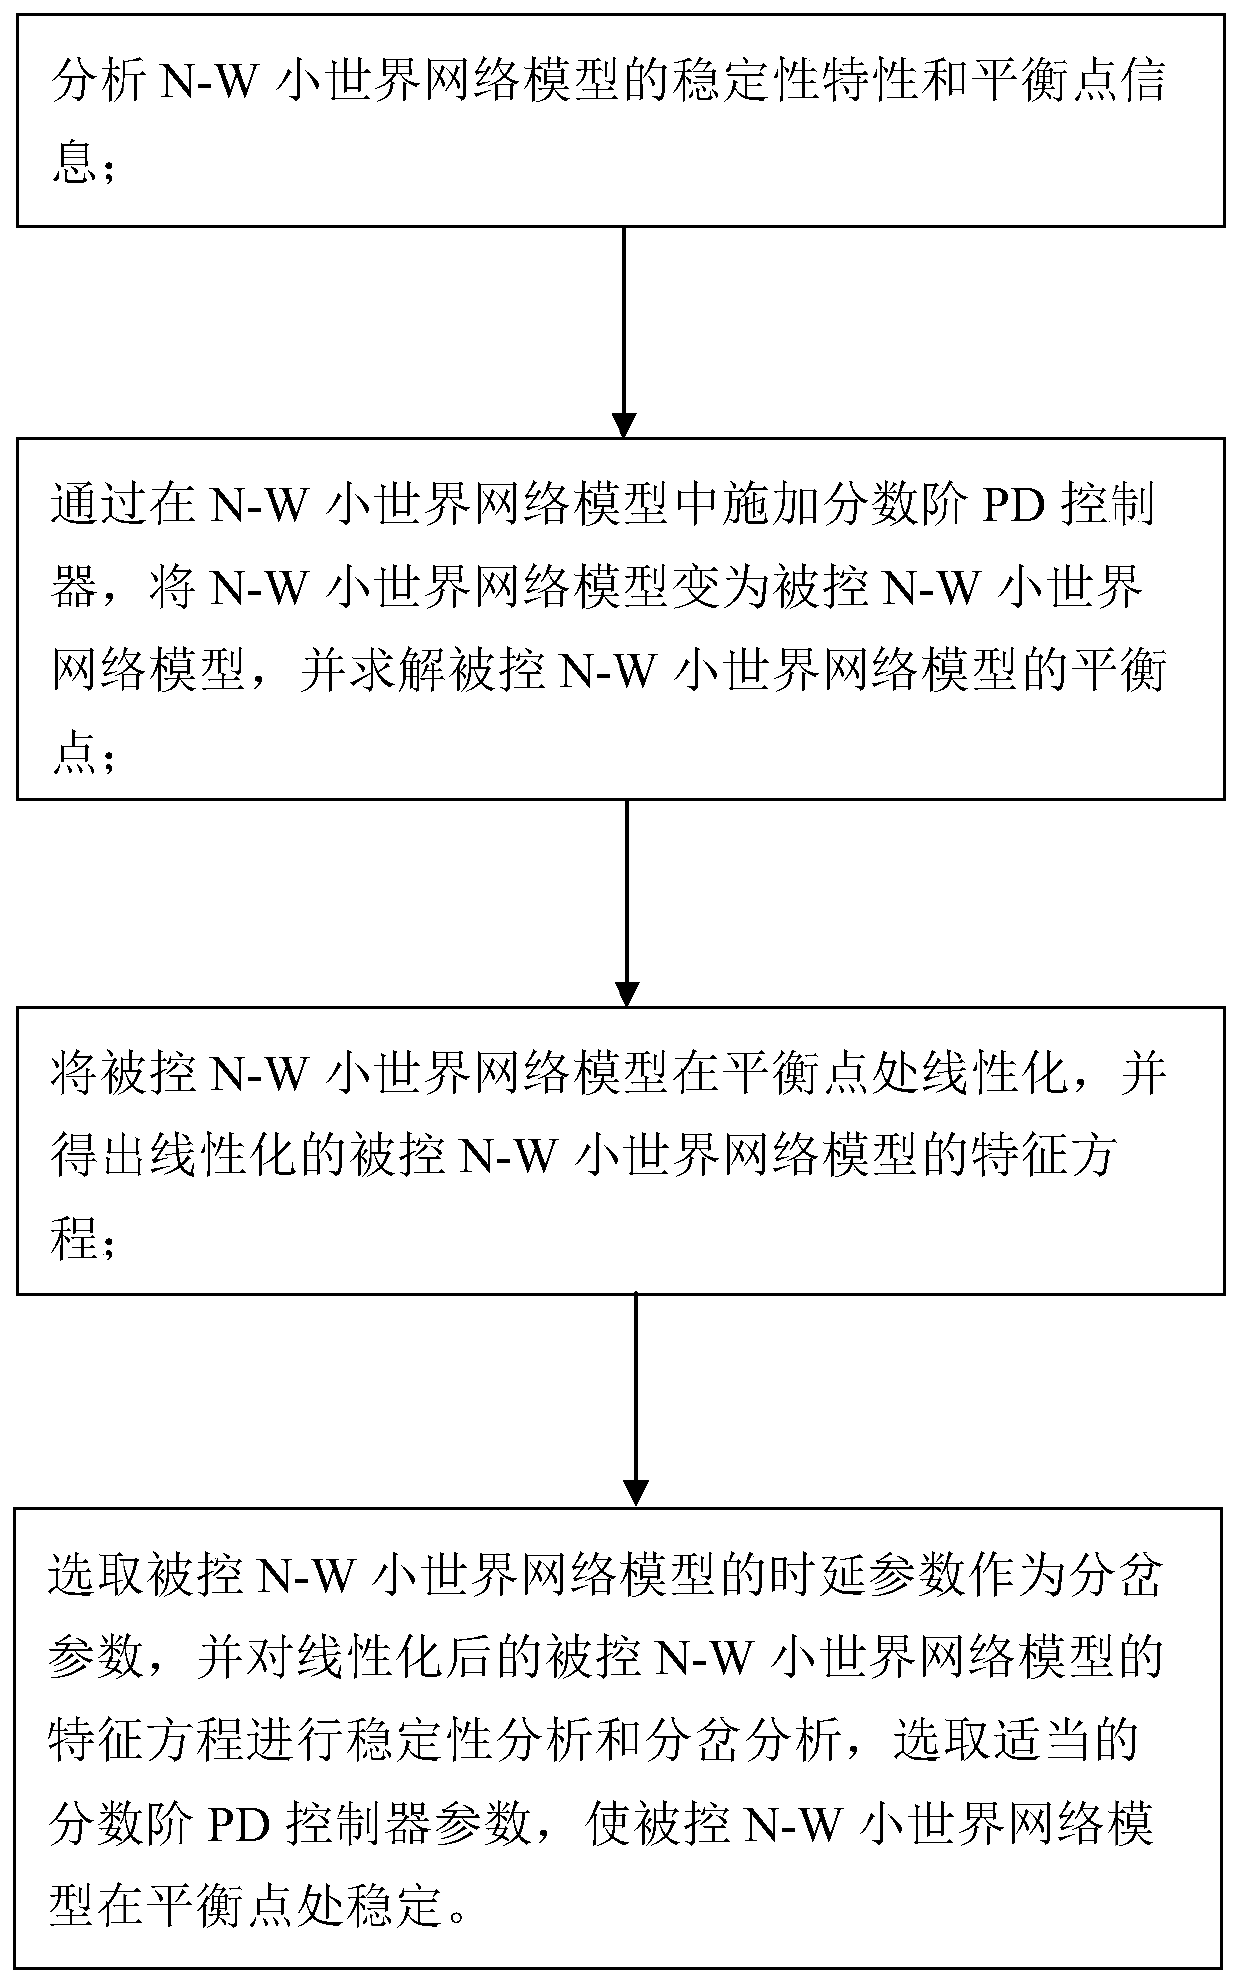 Fractional order PD controller design method based on N-W small world network model